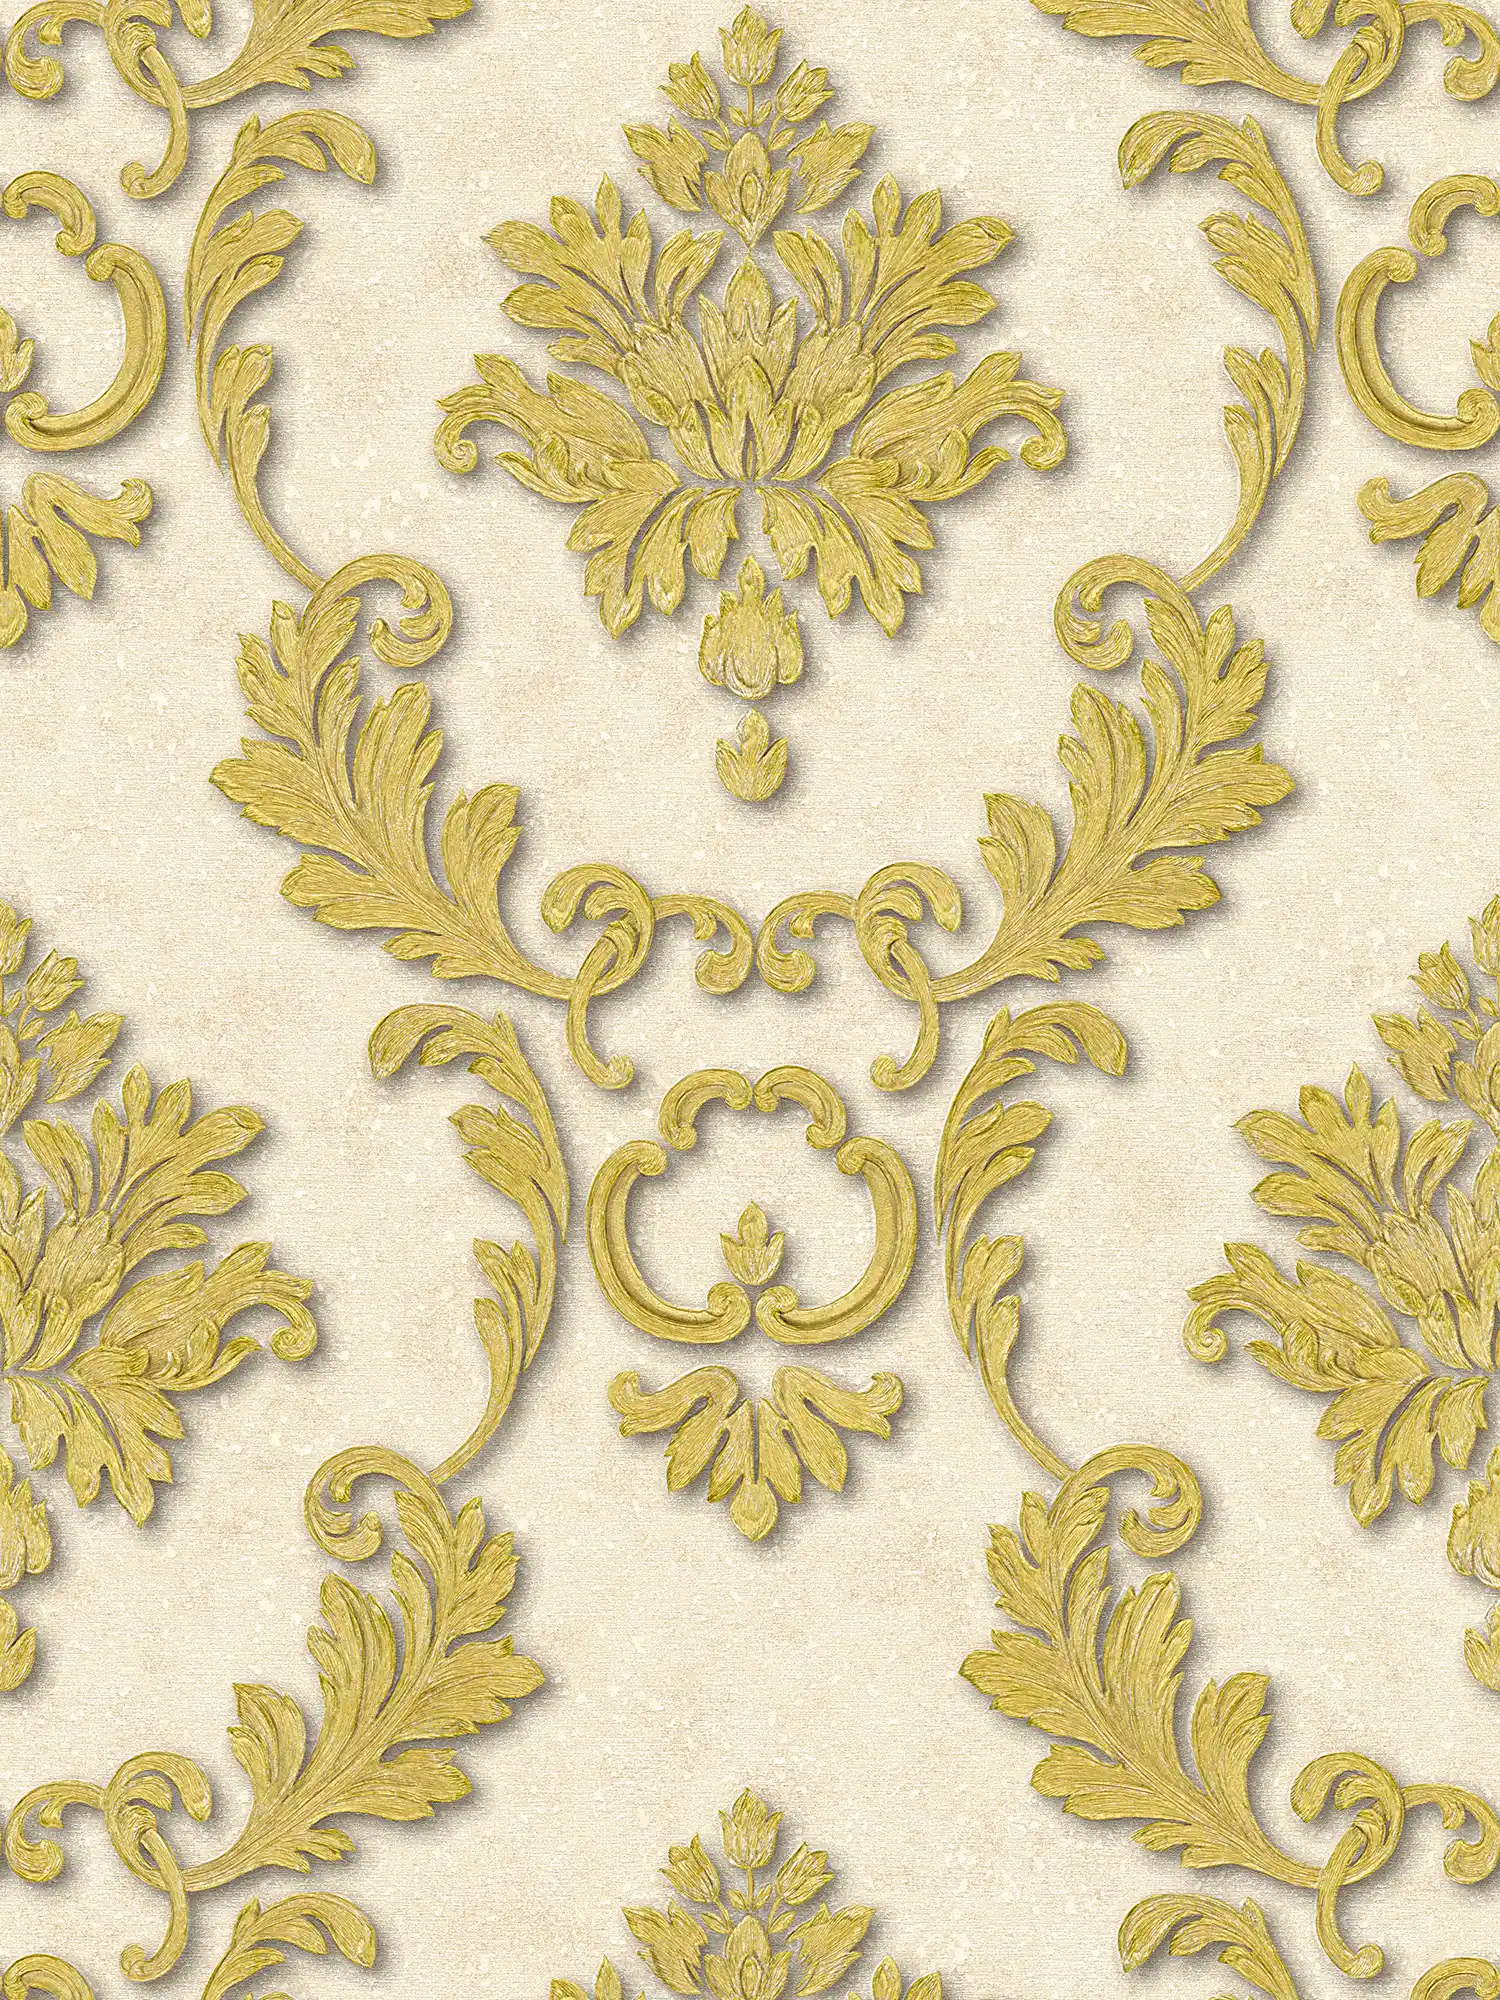 Designer wallpaper floral ornaments & metallic effect - cream, gold
